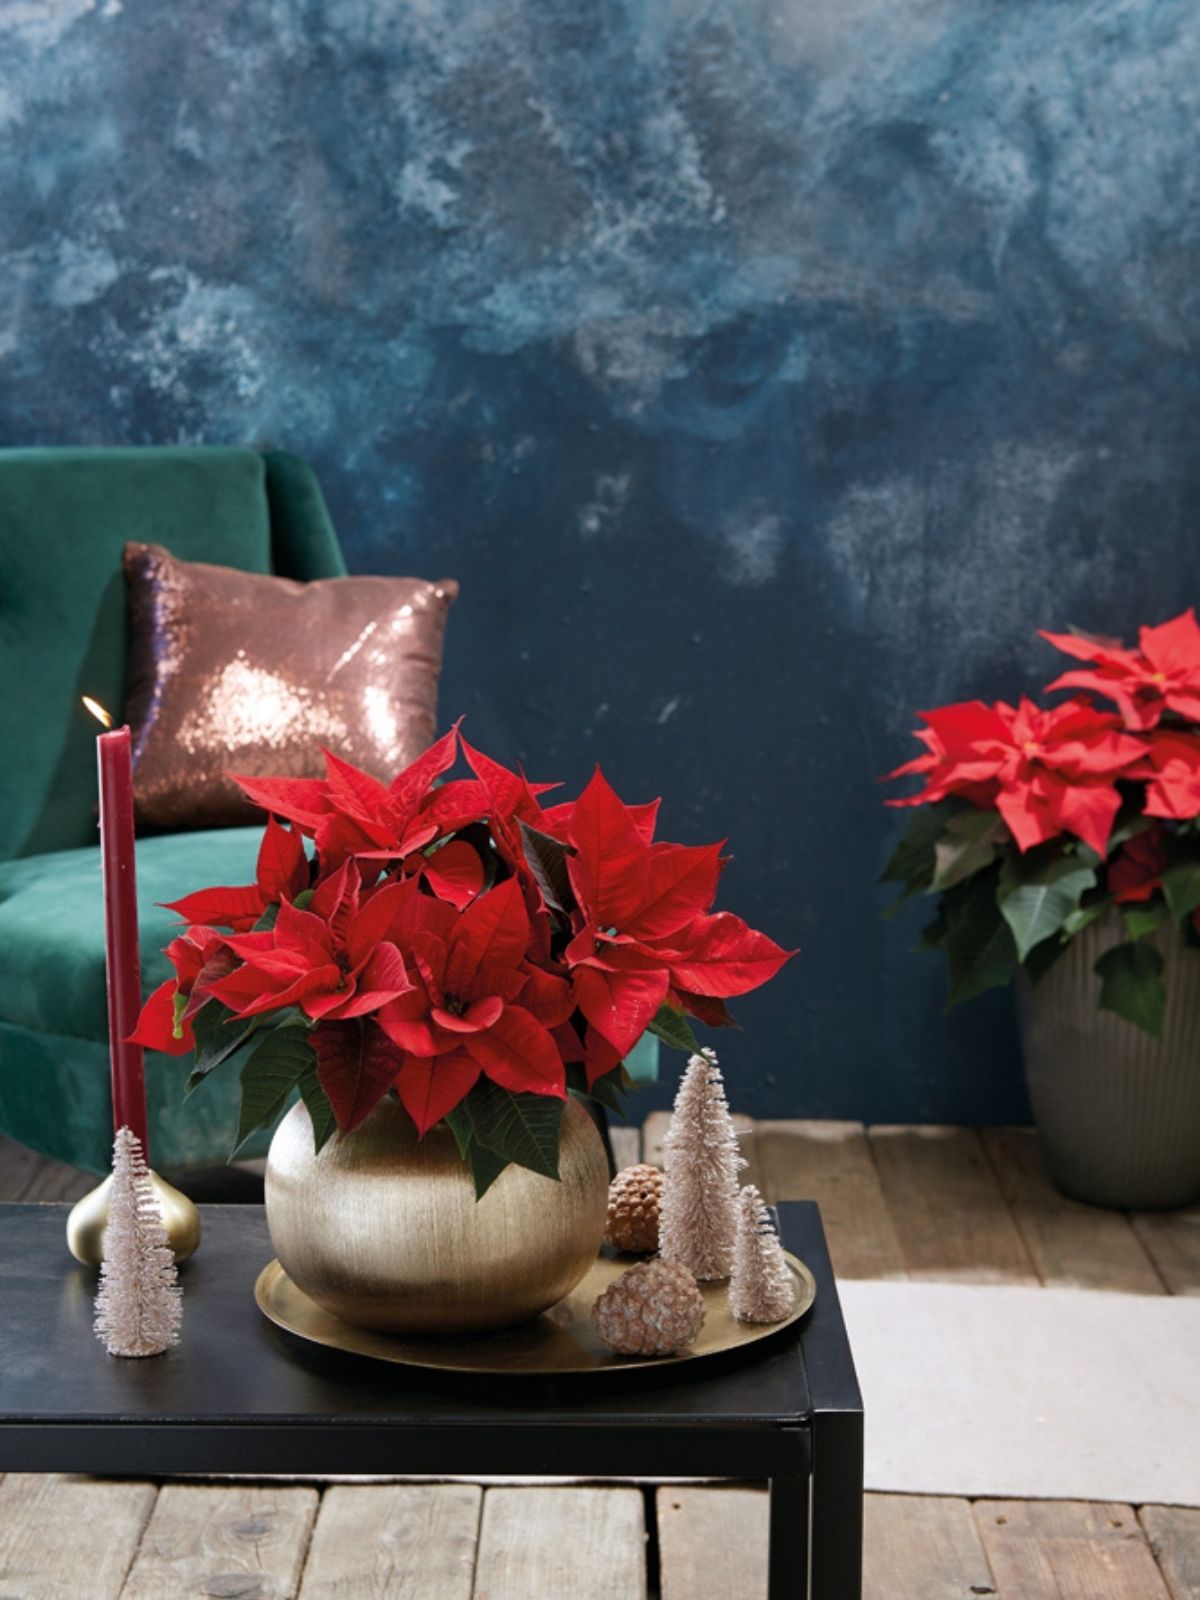 The Most Desired Plants During the Christmas Season in Poland - red poinsettias on table - poinsettias poland on thursd